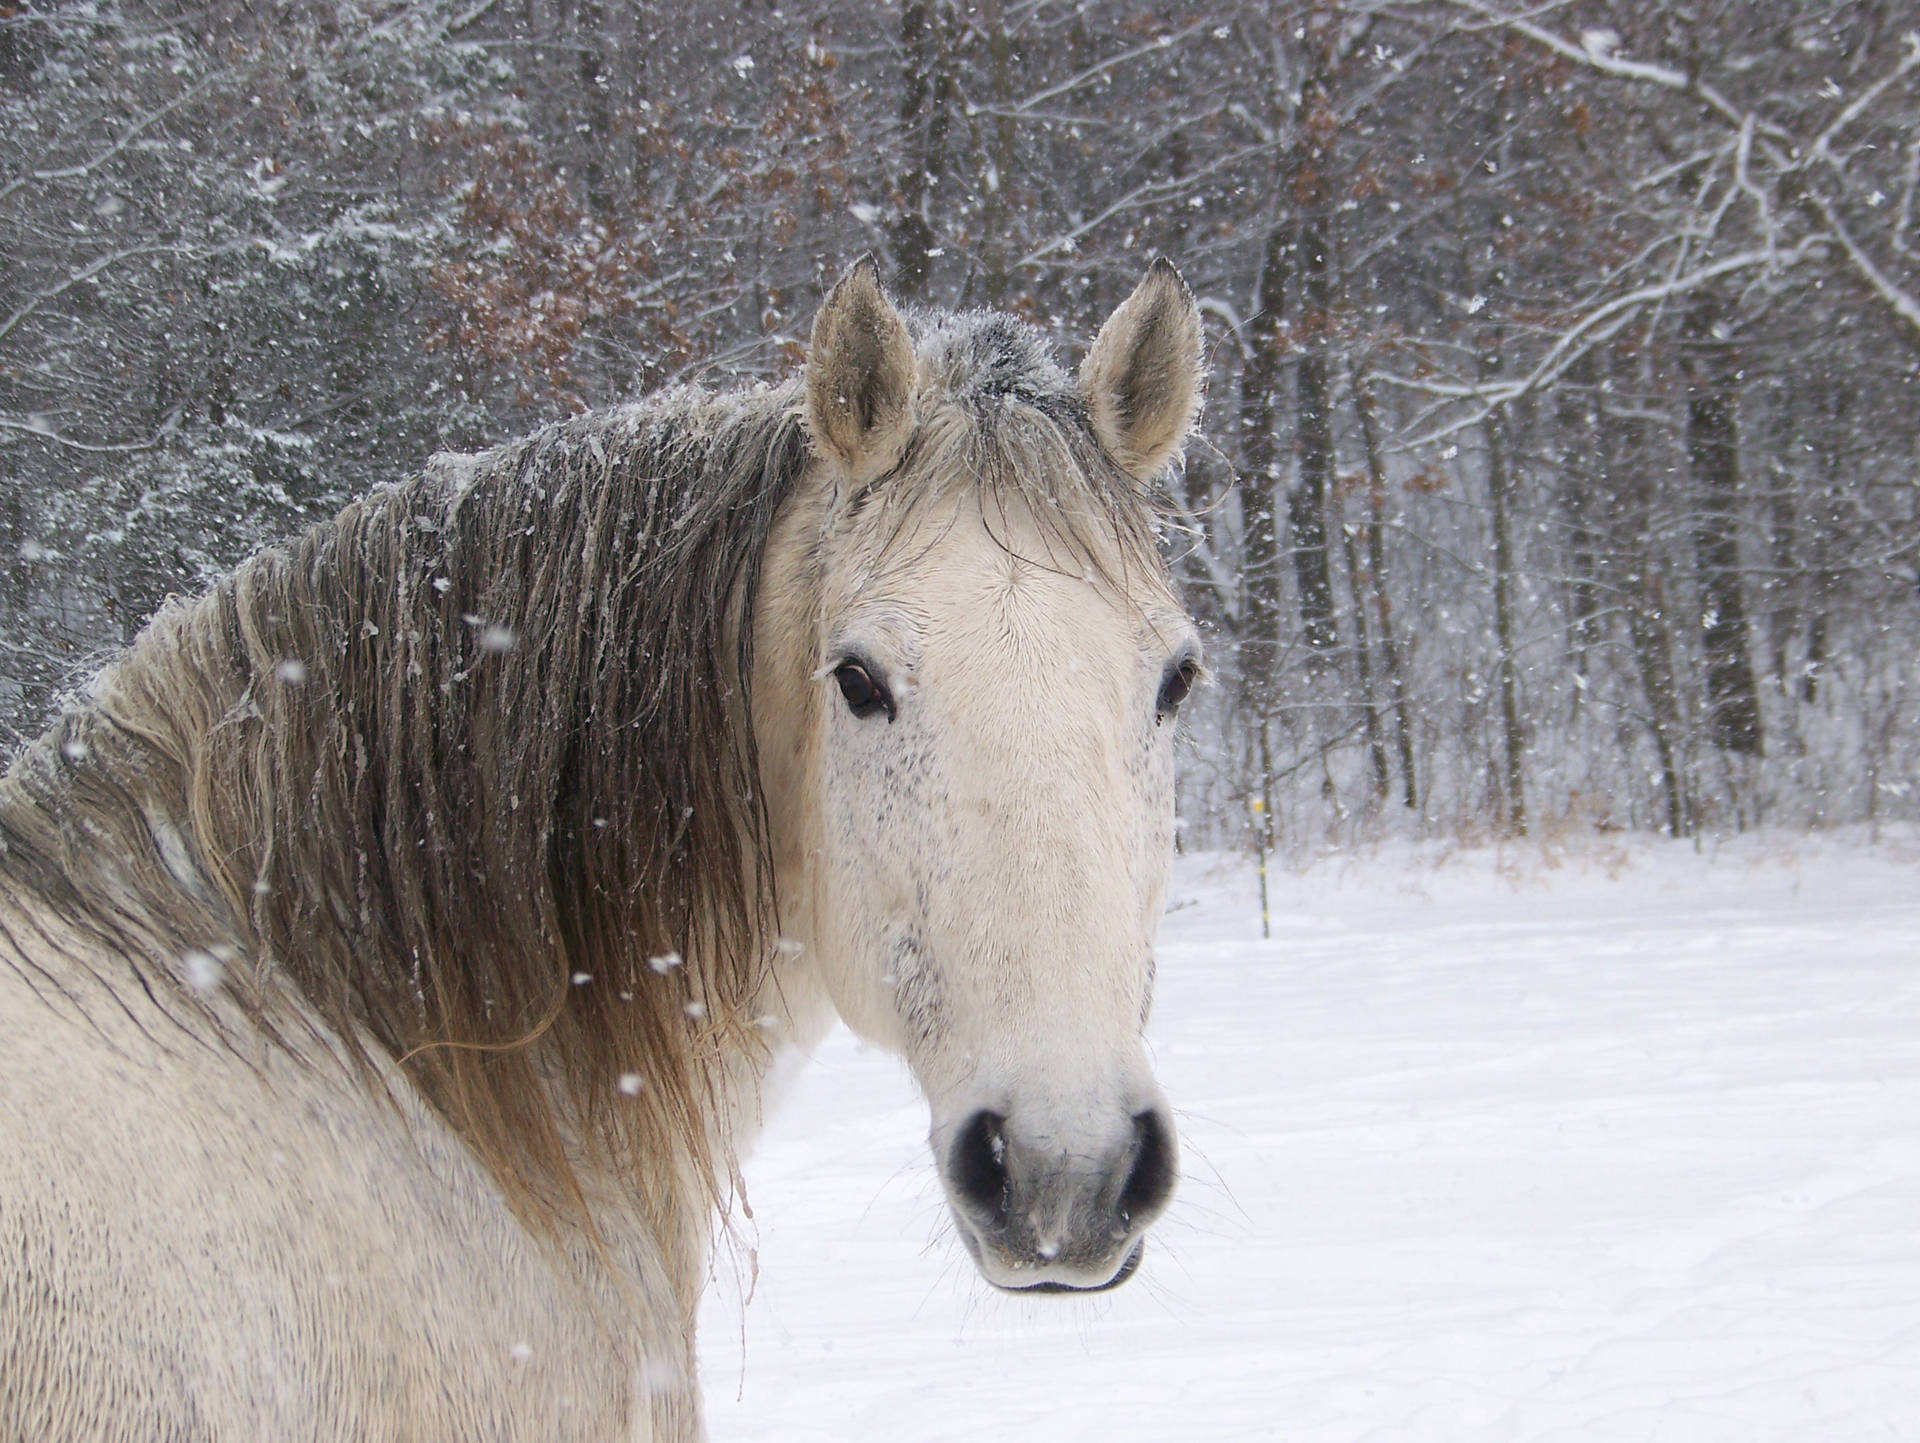 Cute Horse In Snowy Forest Wallpaper